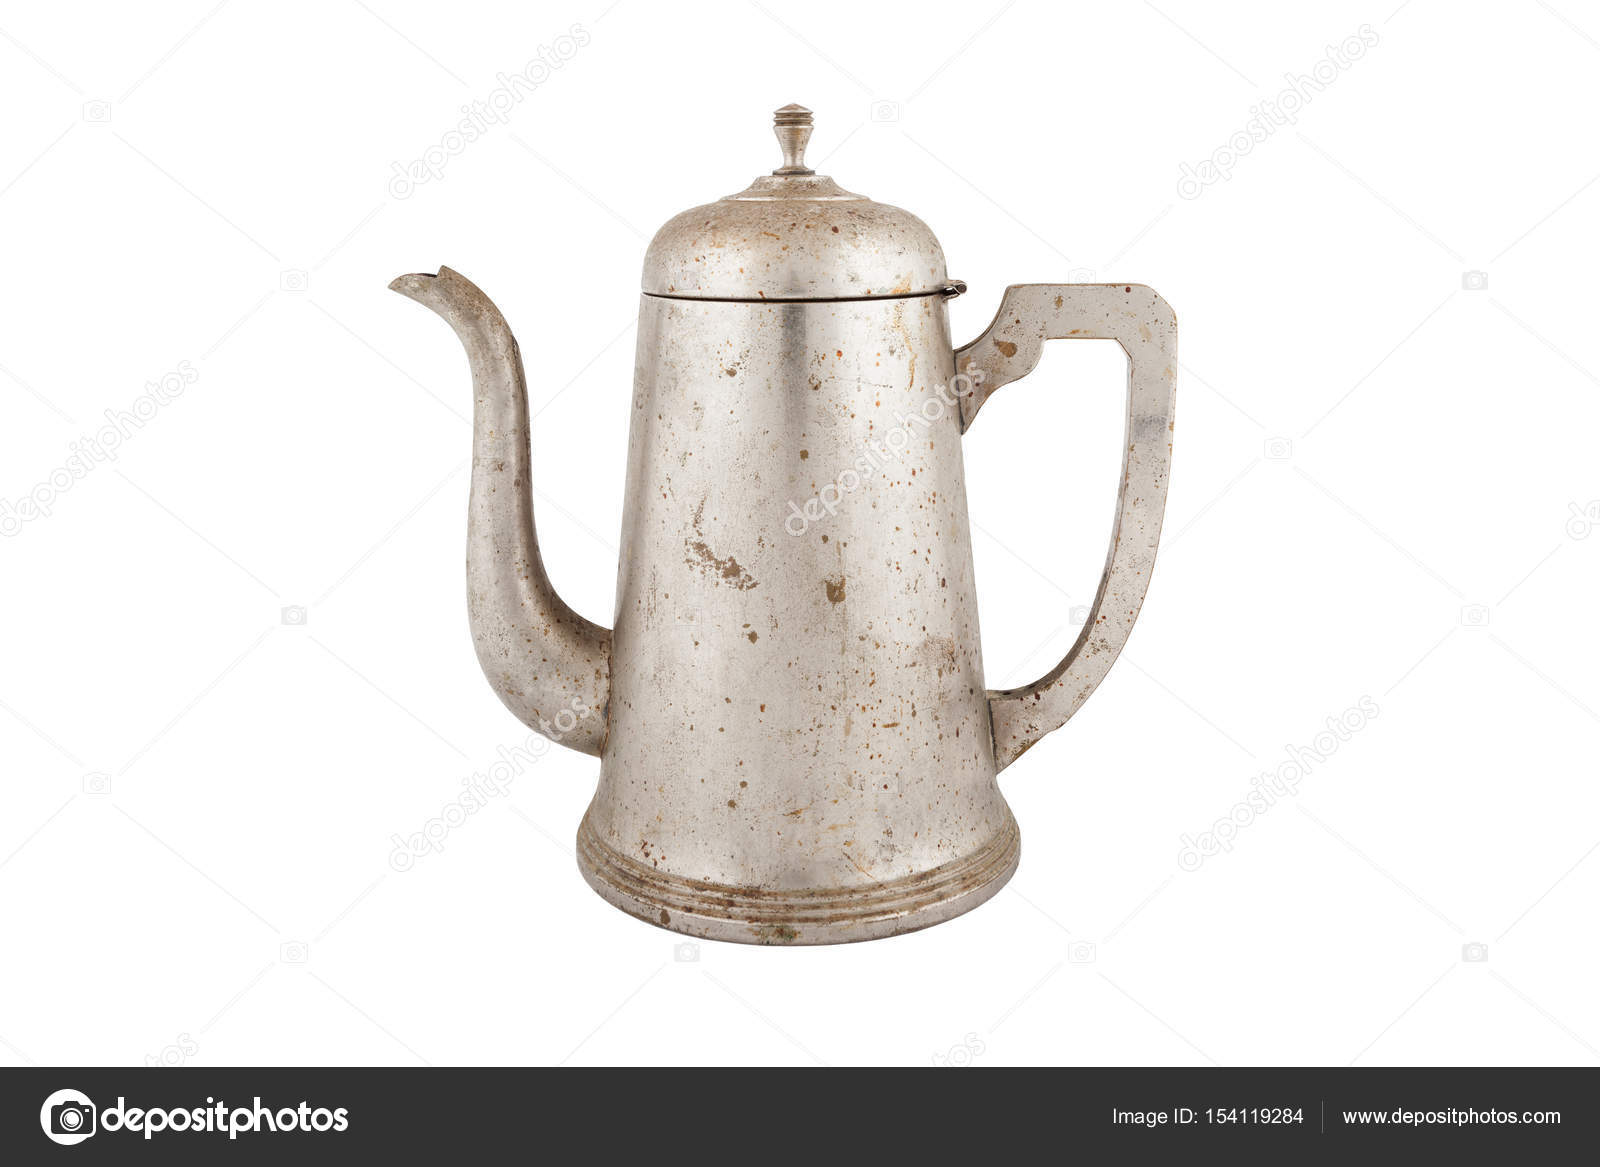 https://st3.depositphotos.com/5711798/15411/i/1600/depositphotos_154119284-stock-photo-old-vintage-coffee-pot-isolated.jpg